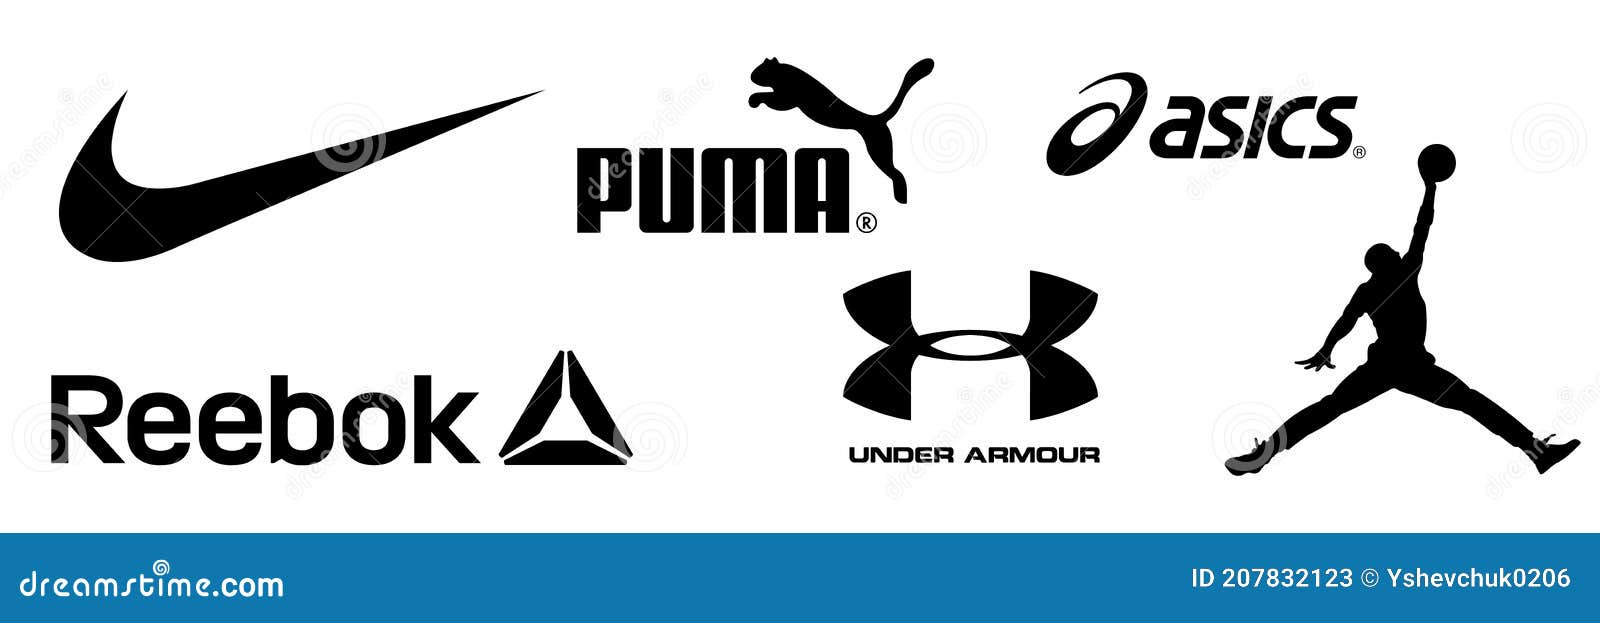 Mizuno, Reebok, Asics, Puma, Armour - Logos of Sports Equipment and Sportswear Kyiv, Ukraine - Editorial Stock Photo - Illustration of footwear, industry: 207832123